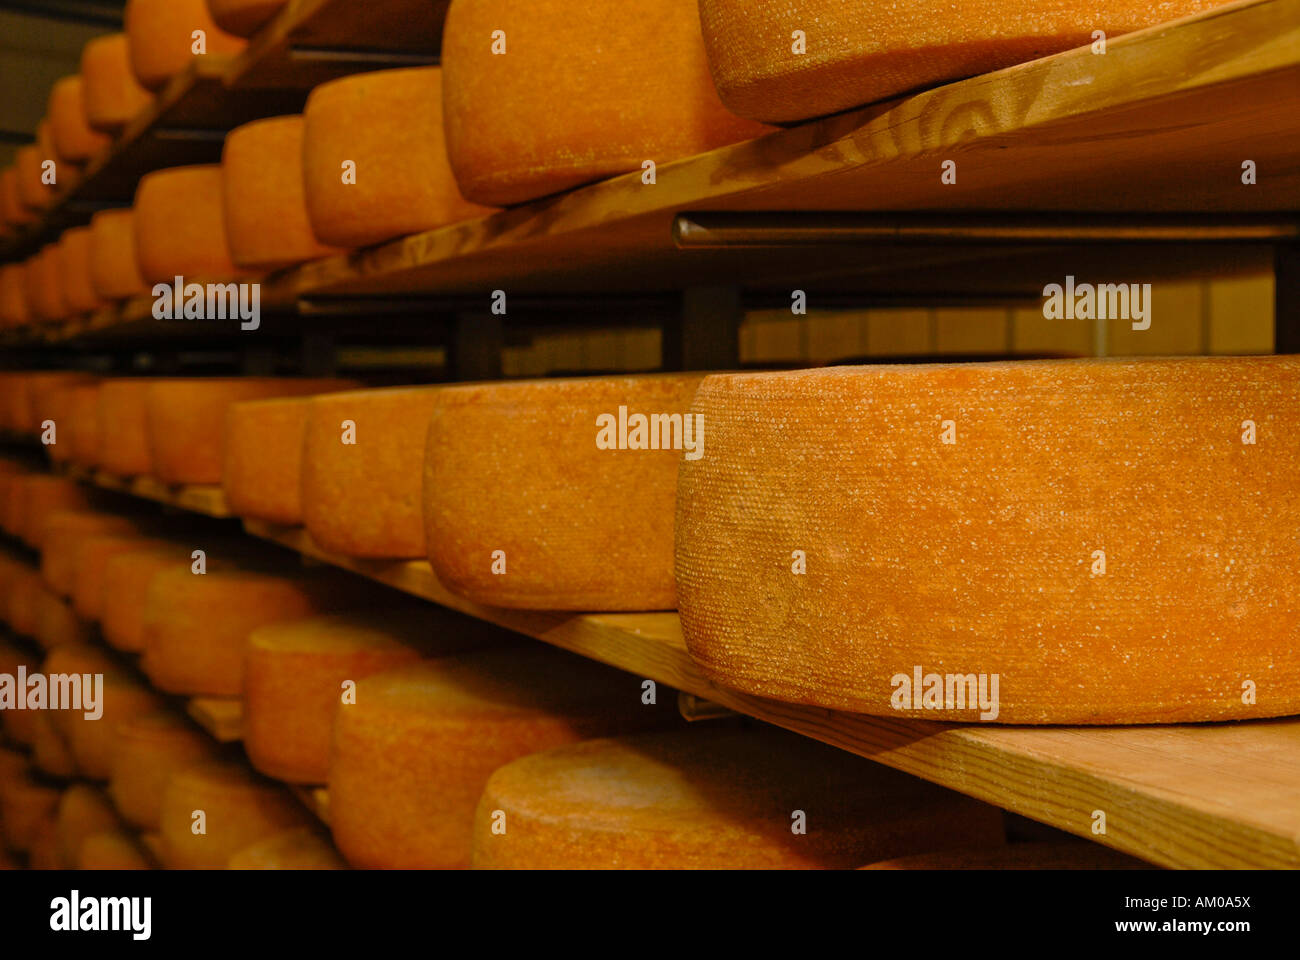 https://c8.alamy.com/comp/AM0A5X/storing-of-organic-cheese-in-wooden-shelves-AM0A5X.jpg